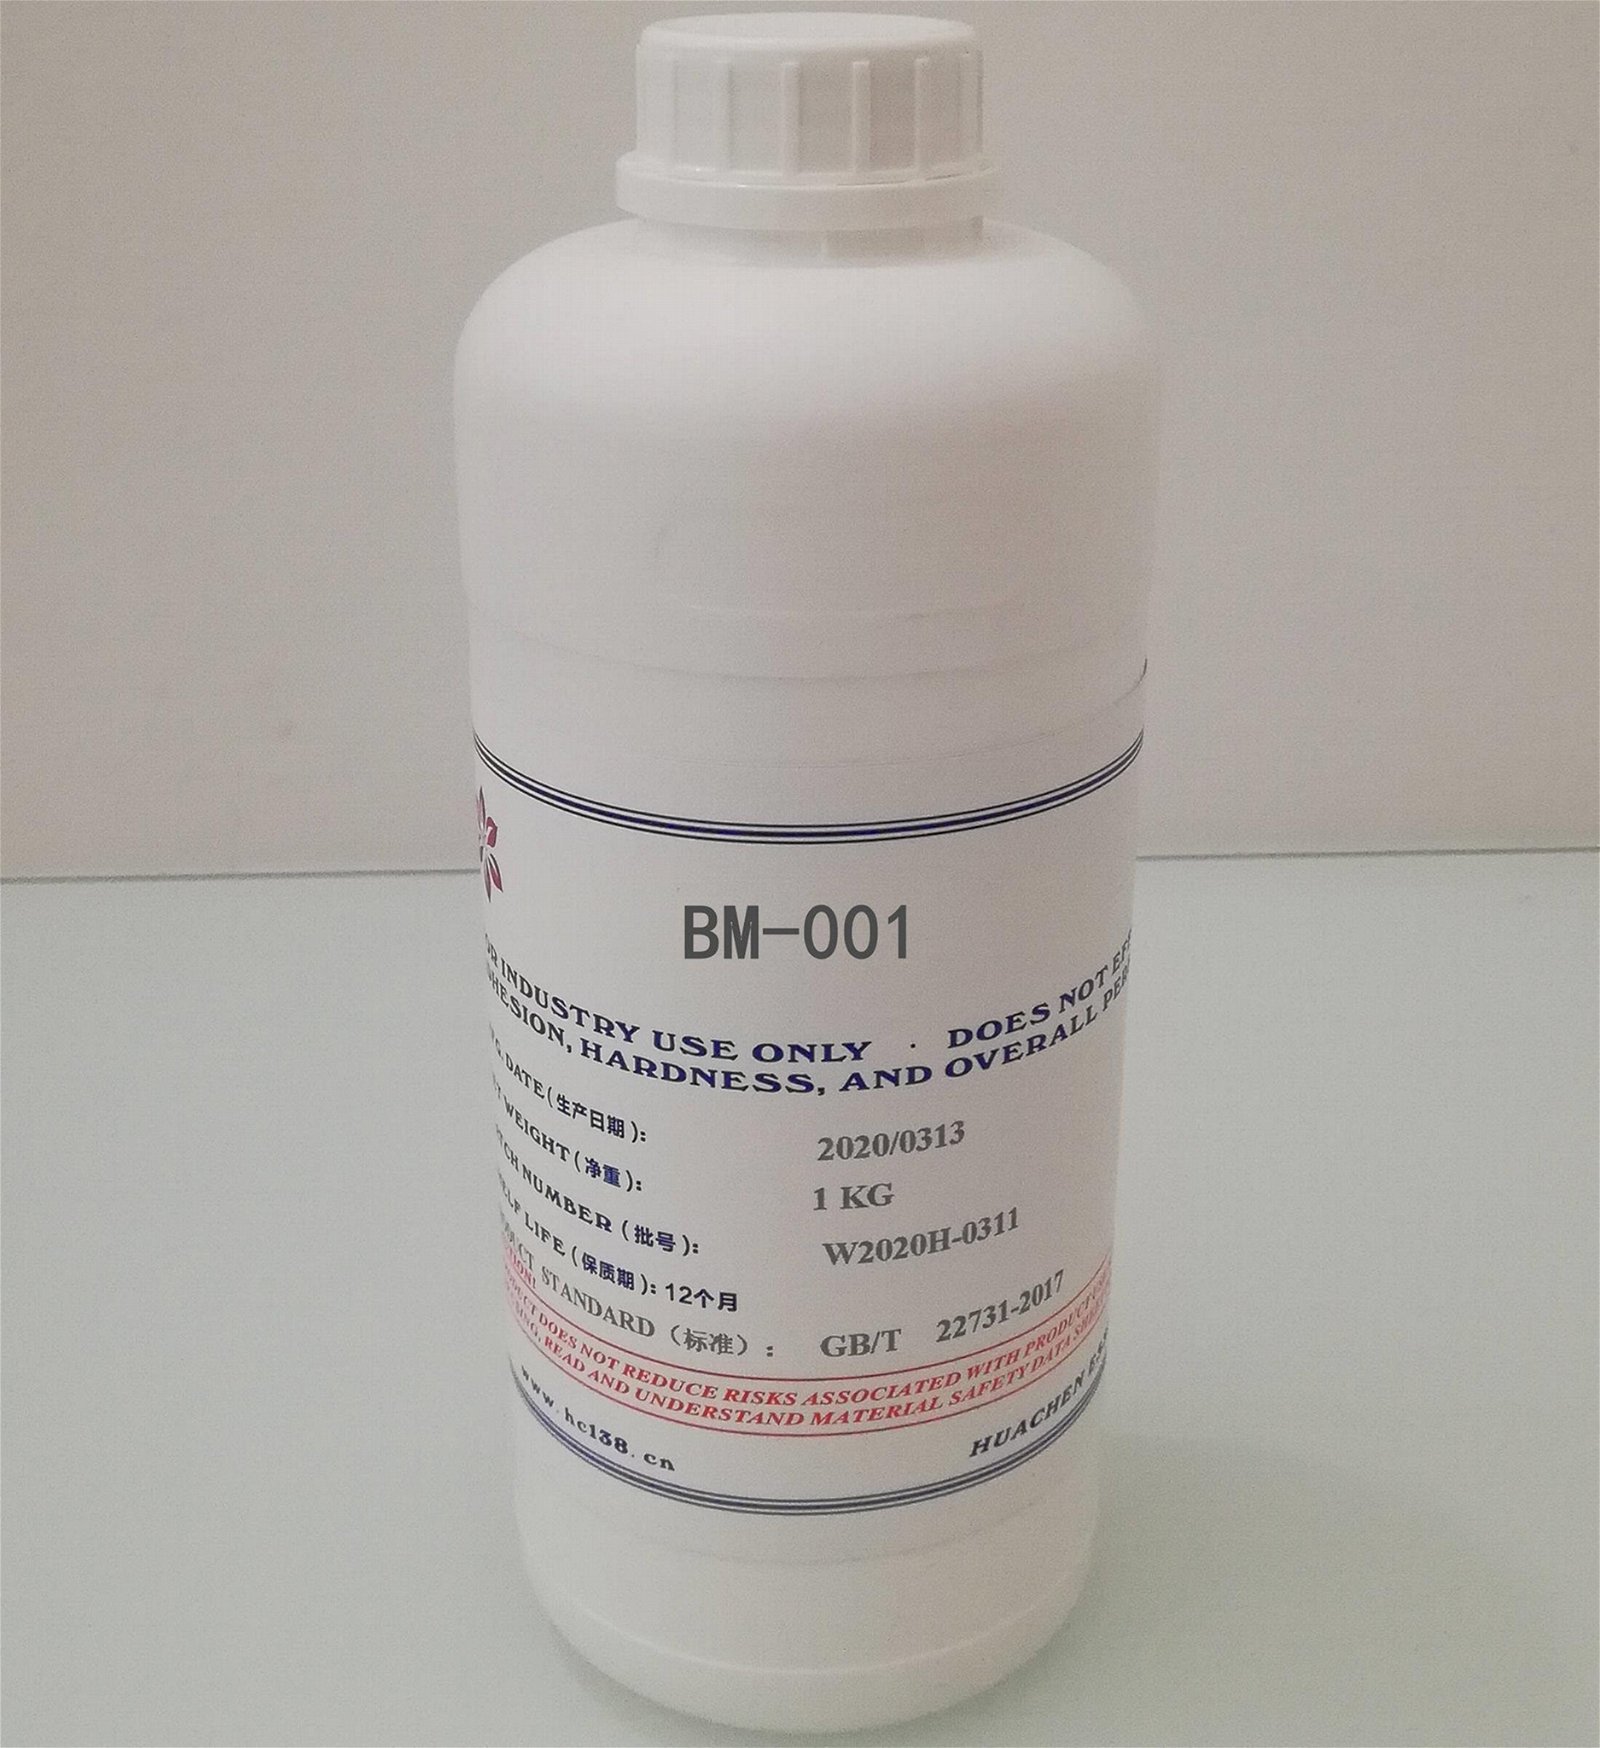 BM-001胶水除味剂胶水遮味剂胶水除臭剂胶粘剂除臭剂 3